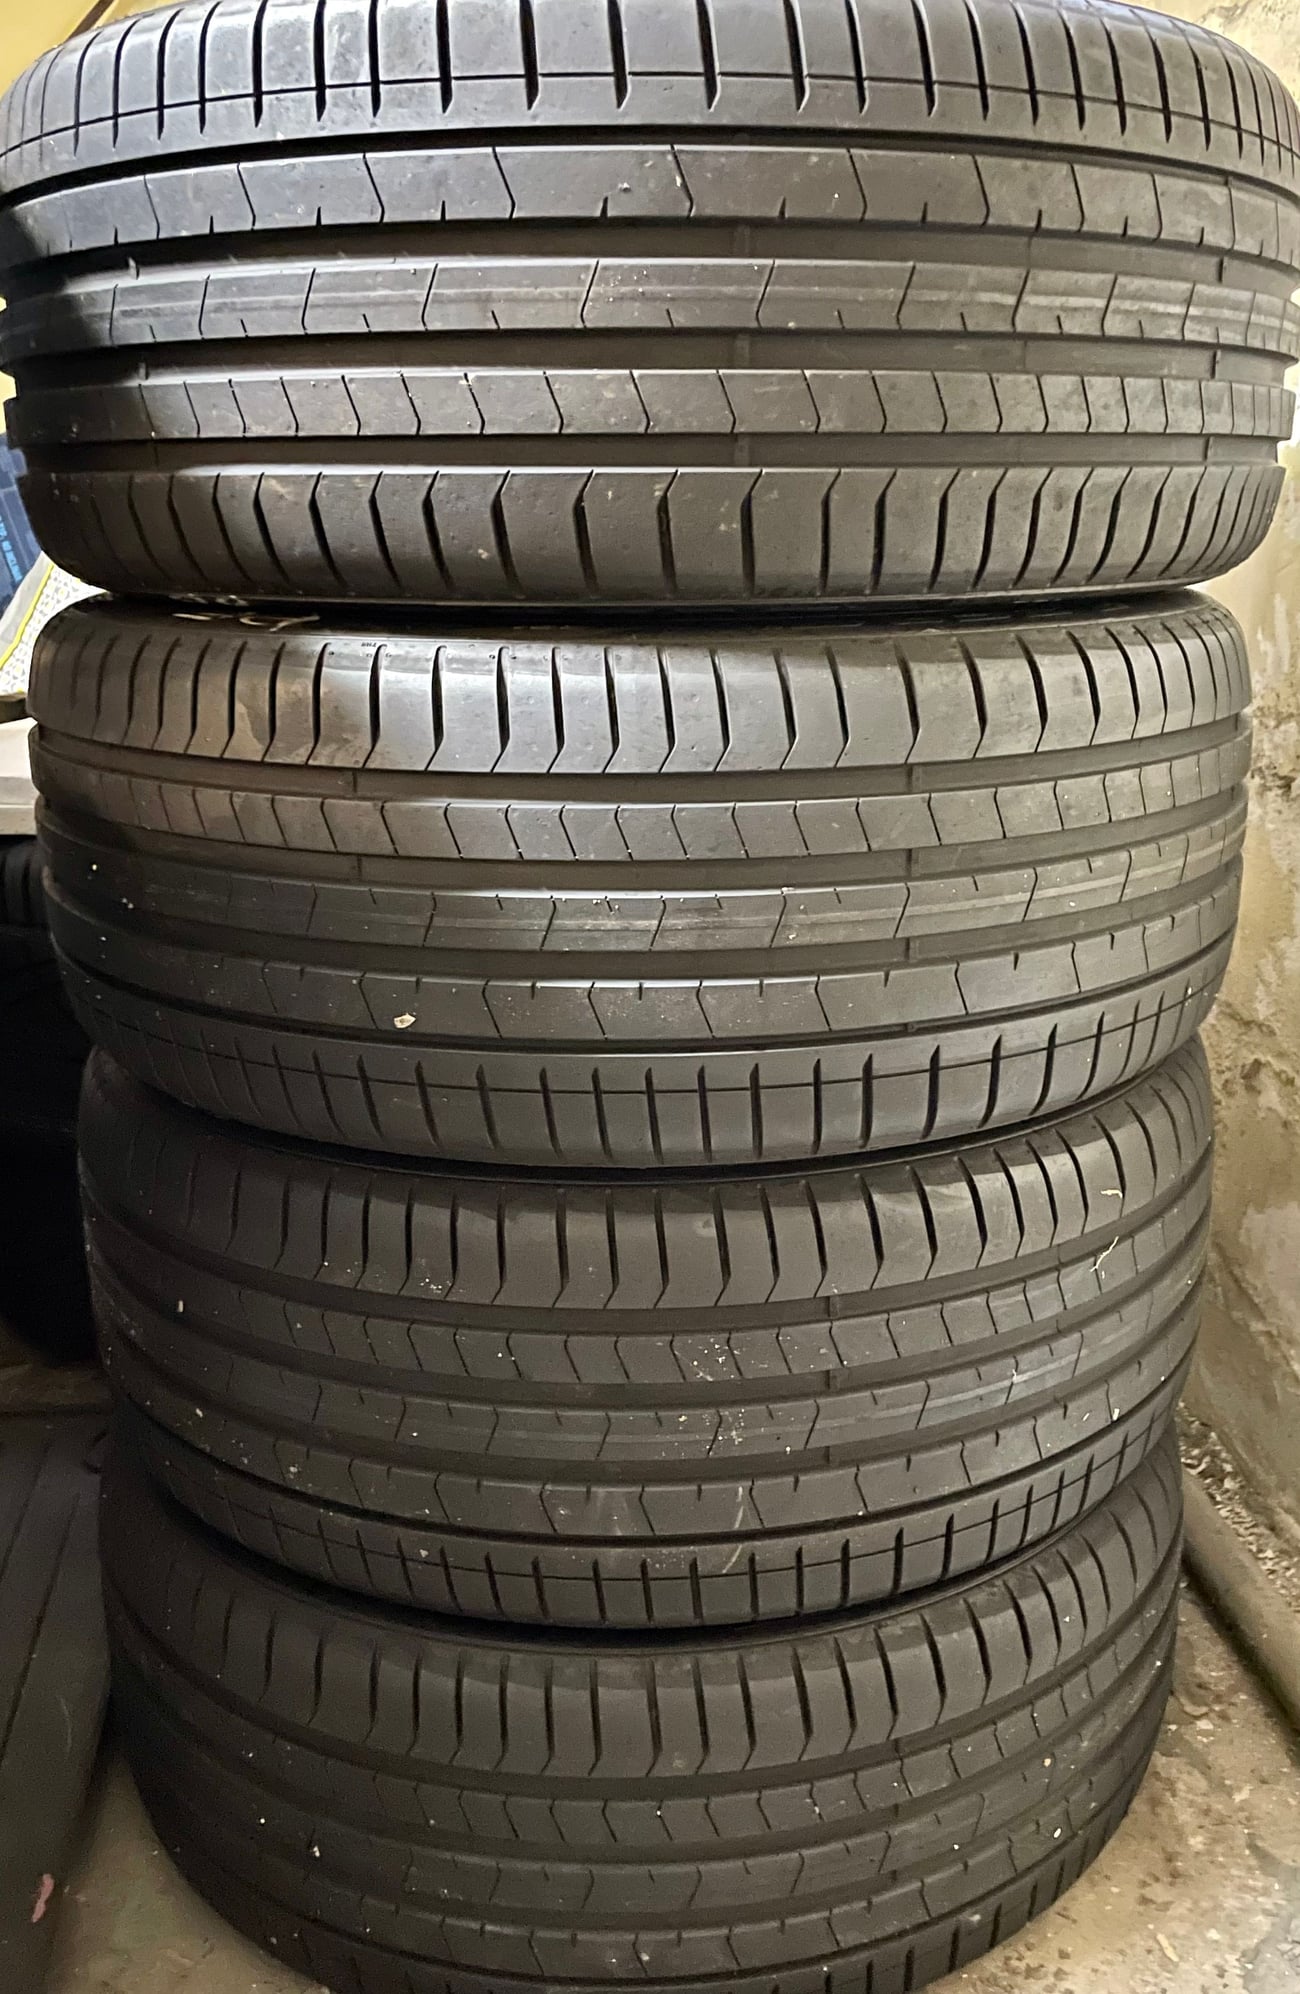 Wheels and Tires/Axles - 255/40/21 Pirelli PZero R01 OEM tires - Used - Brooklyn, NY 11220, United States